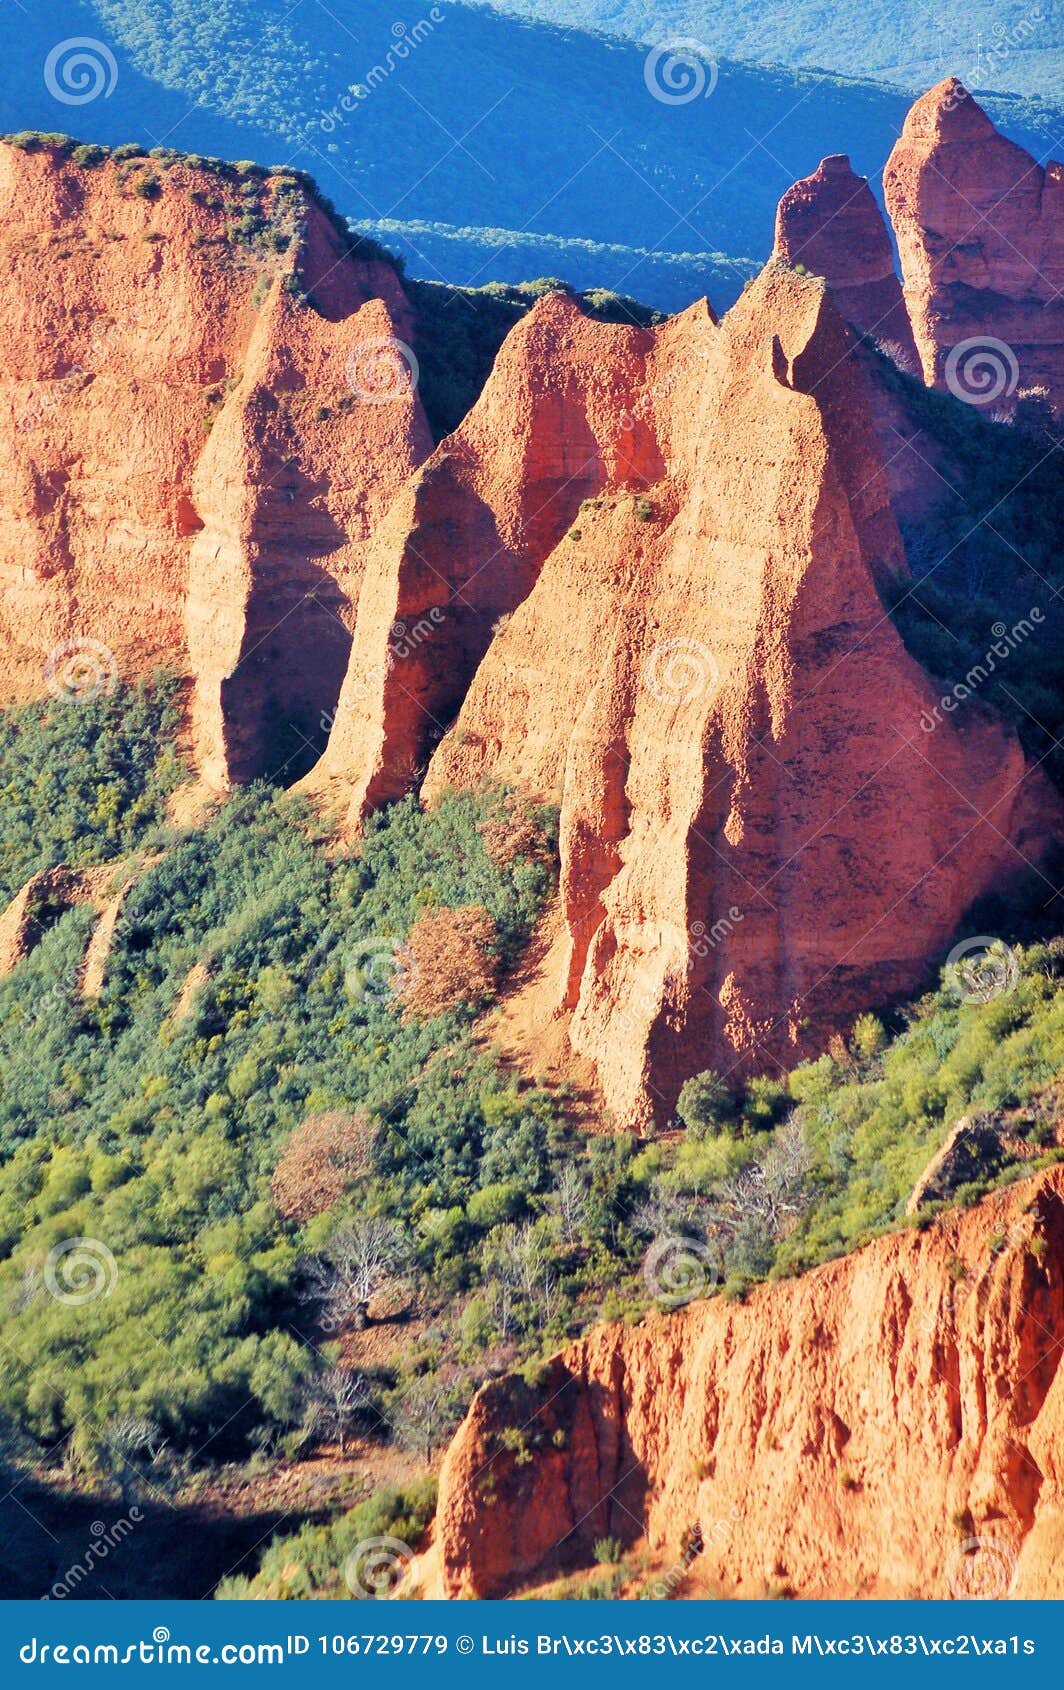 amazing landscape of orange mountains. maravilloso paisaje de montaÃÂ±as anaranjadas con un verde horizonte. ancient roman mines.